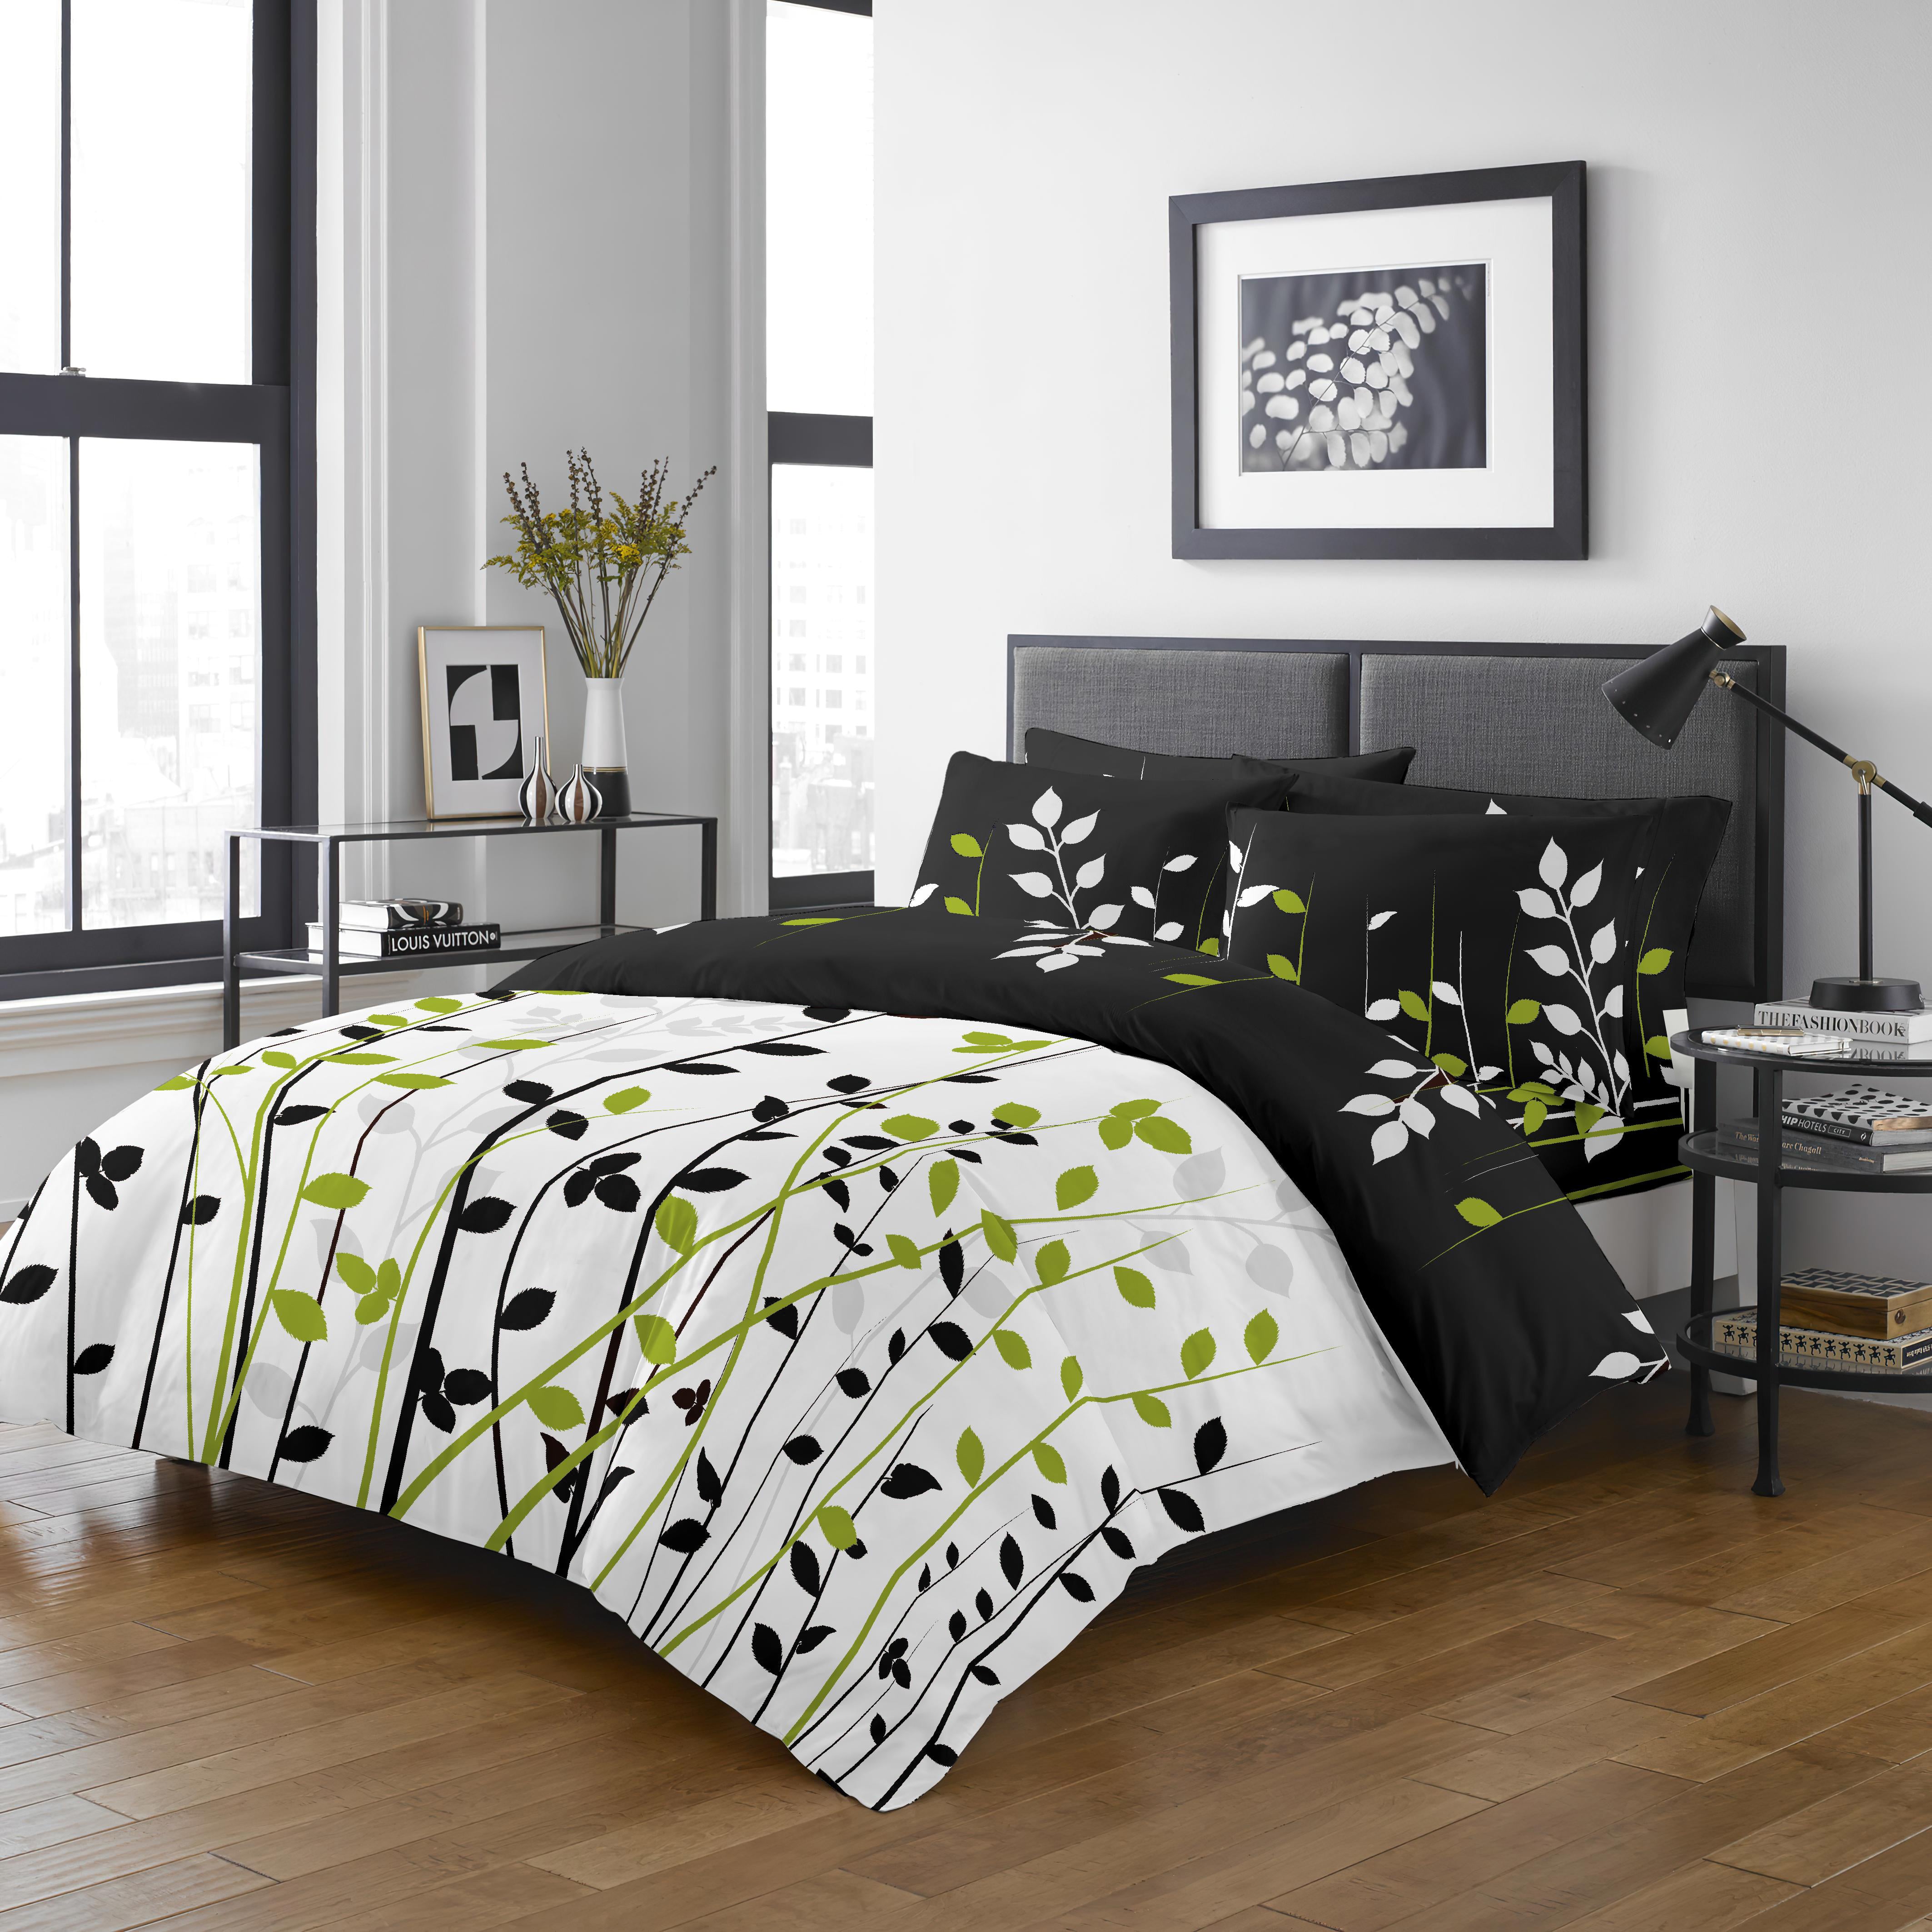 Comforter sets gray black with logo white full louis vuitton bedding set